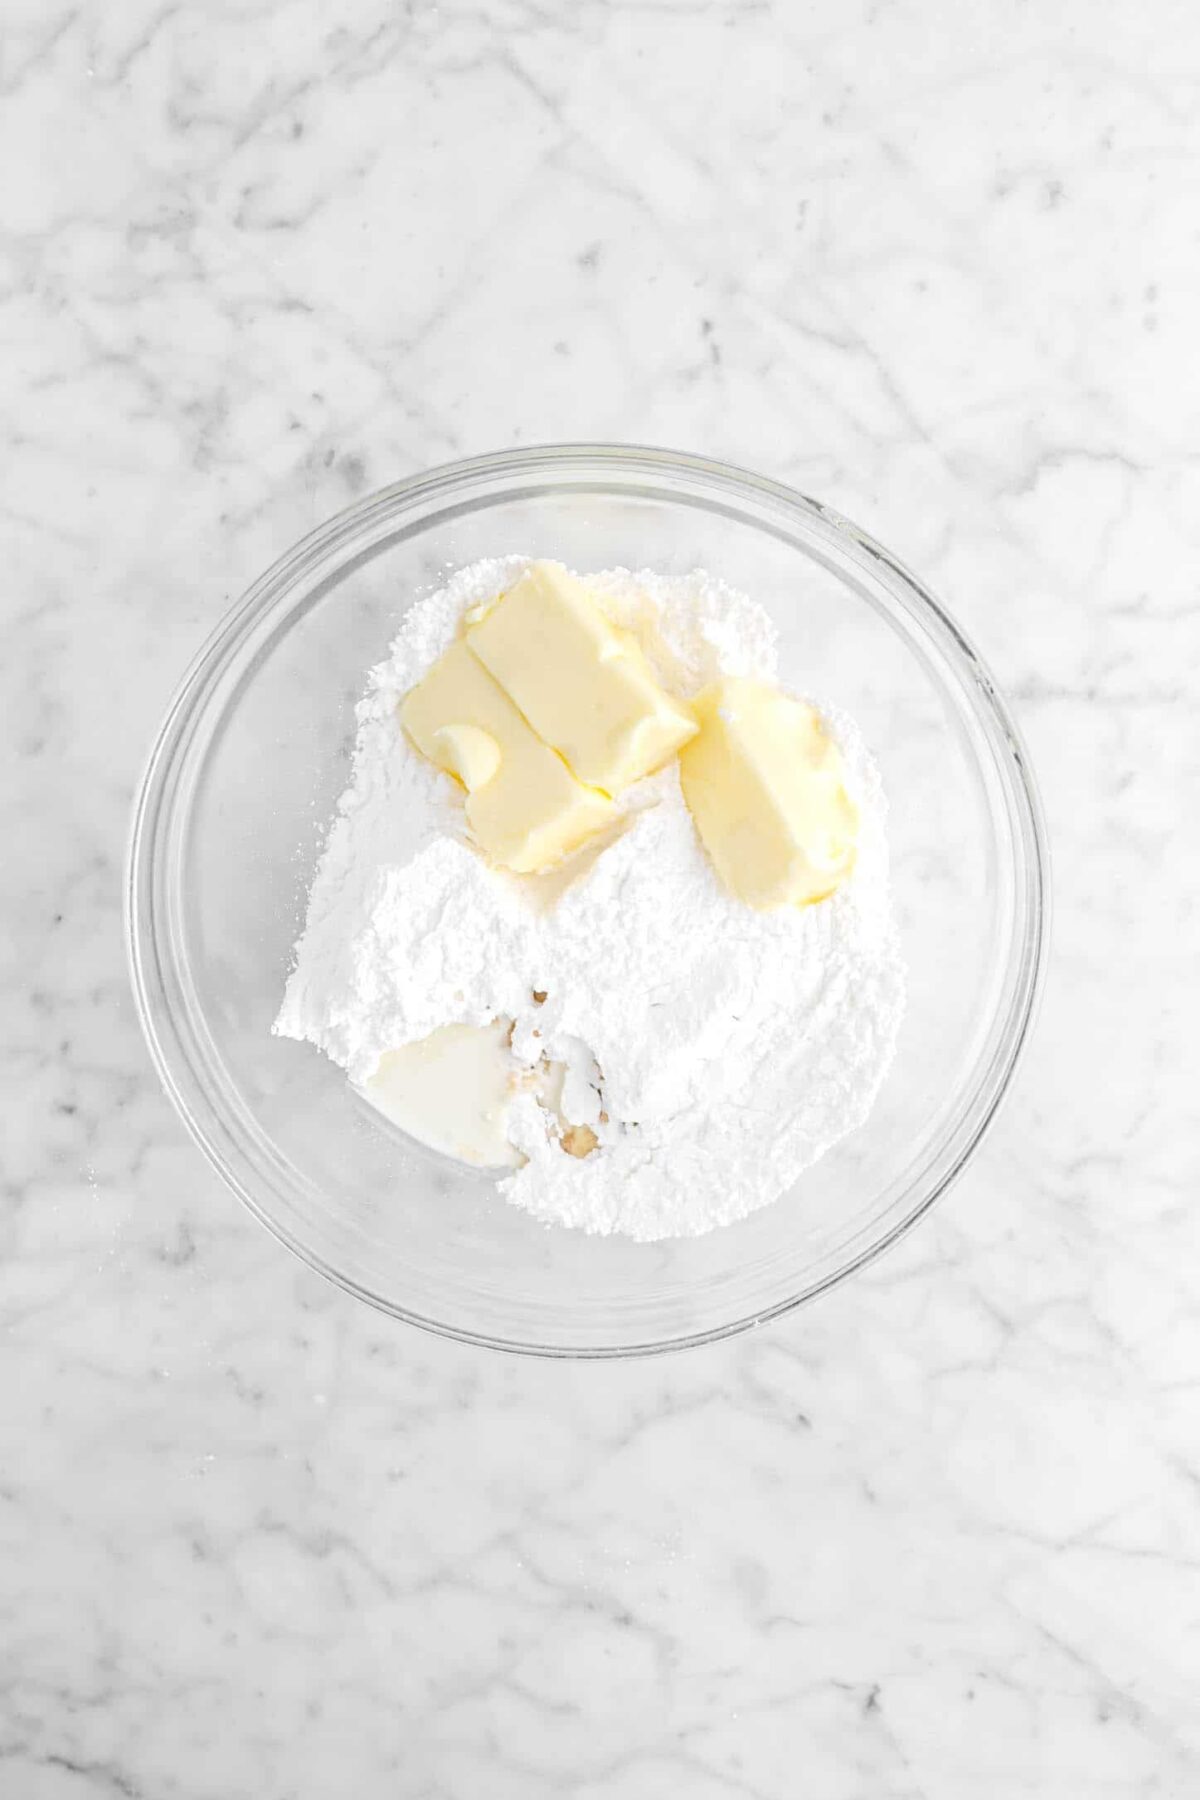 butter, powdered sugar, milk, and vanilla in glass bowl